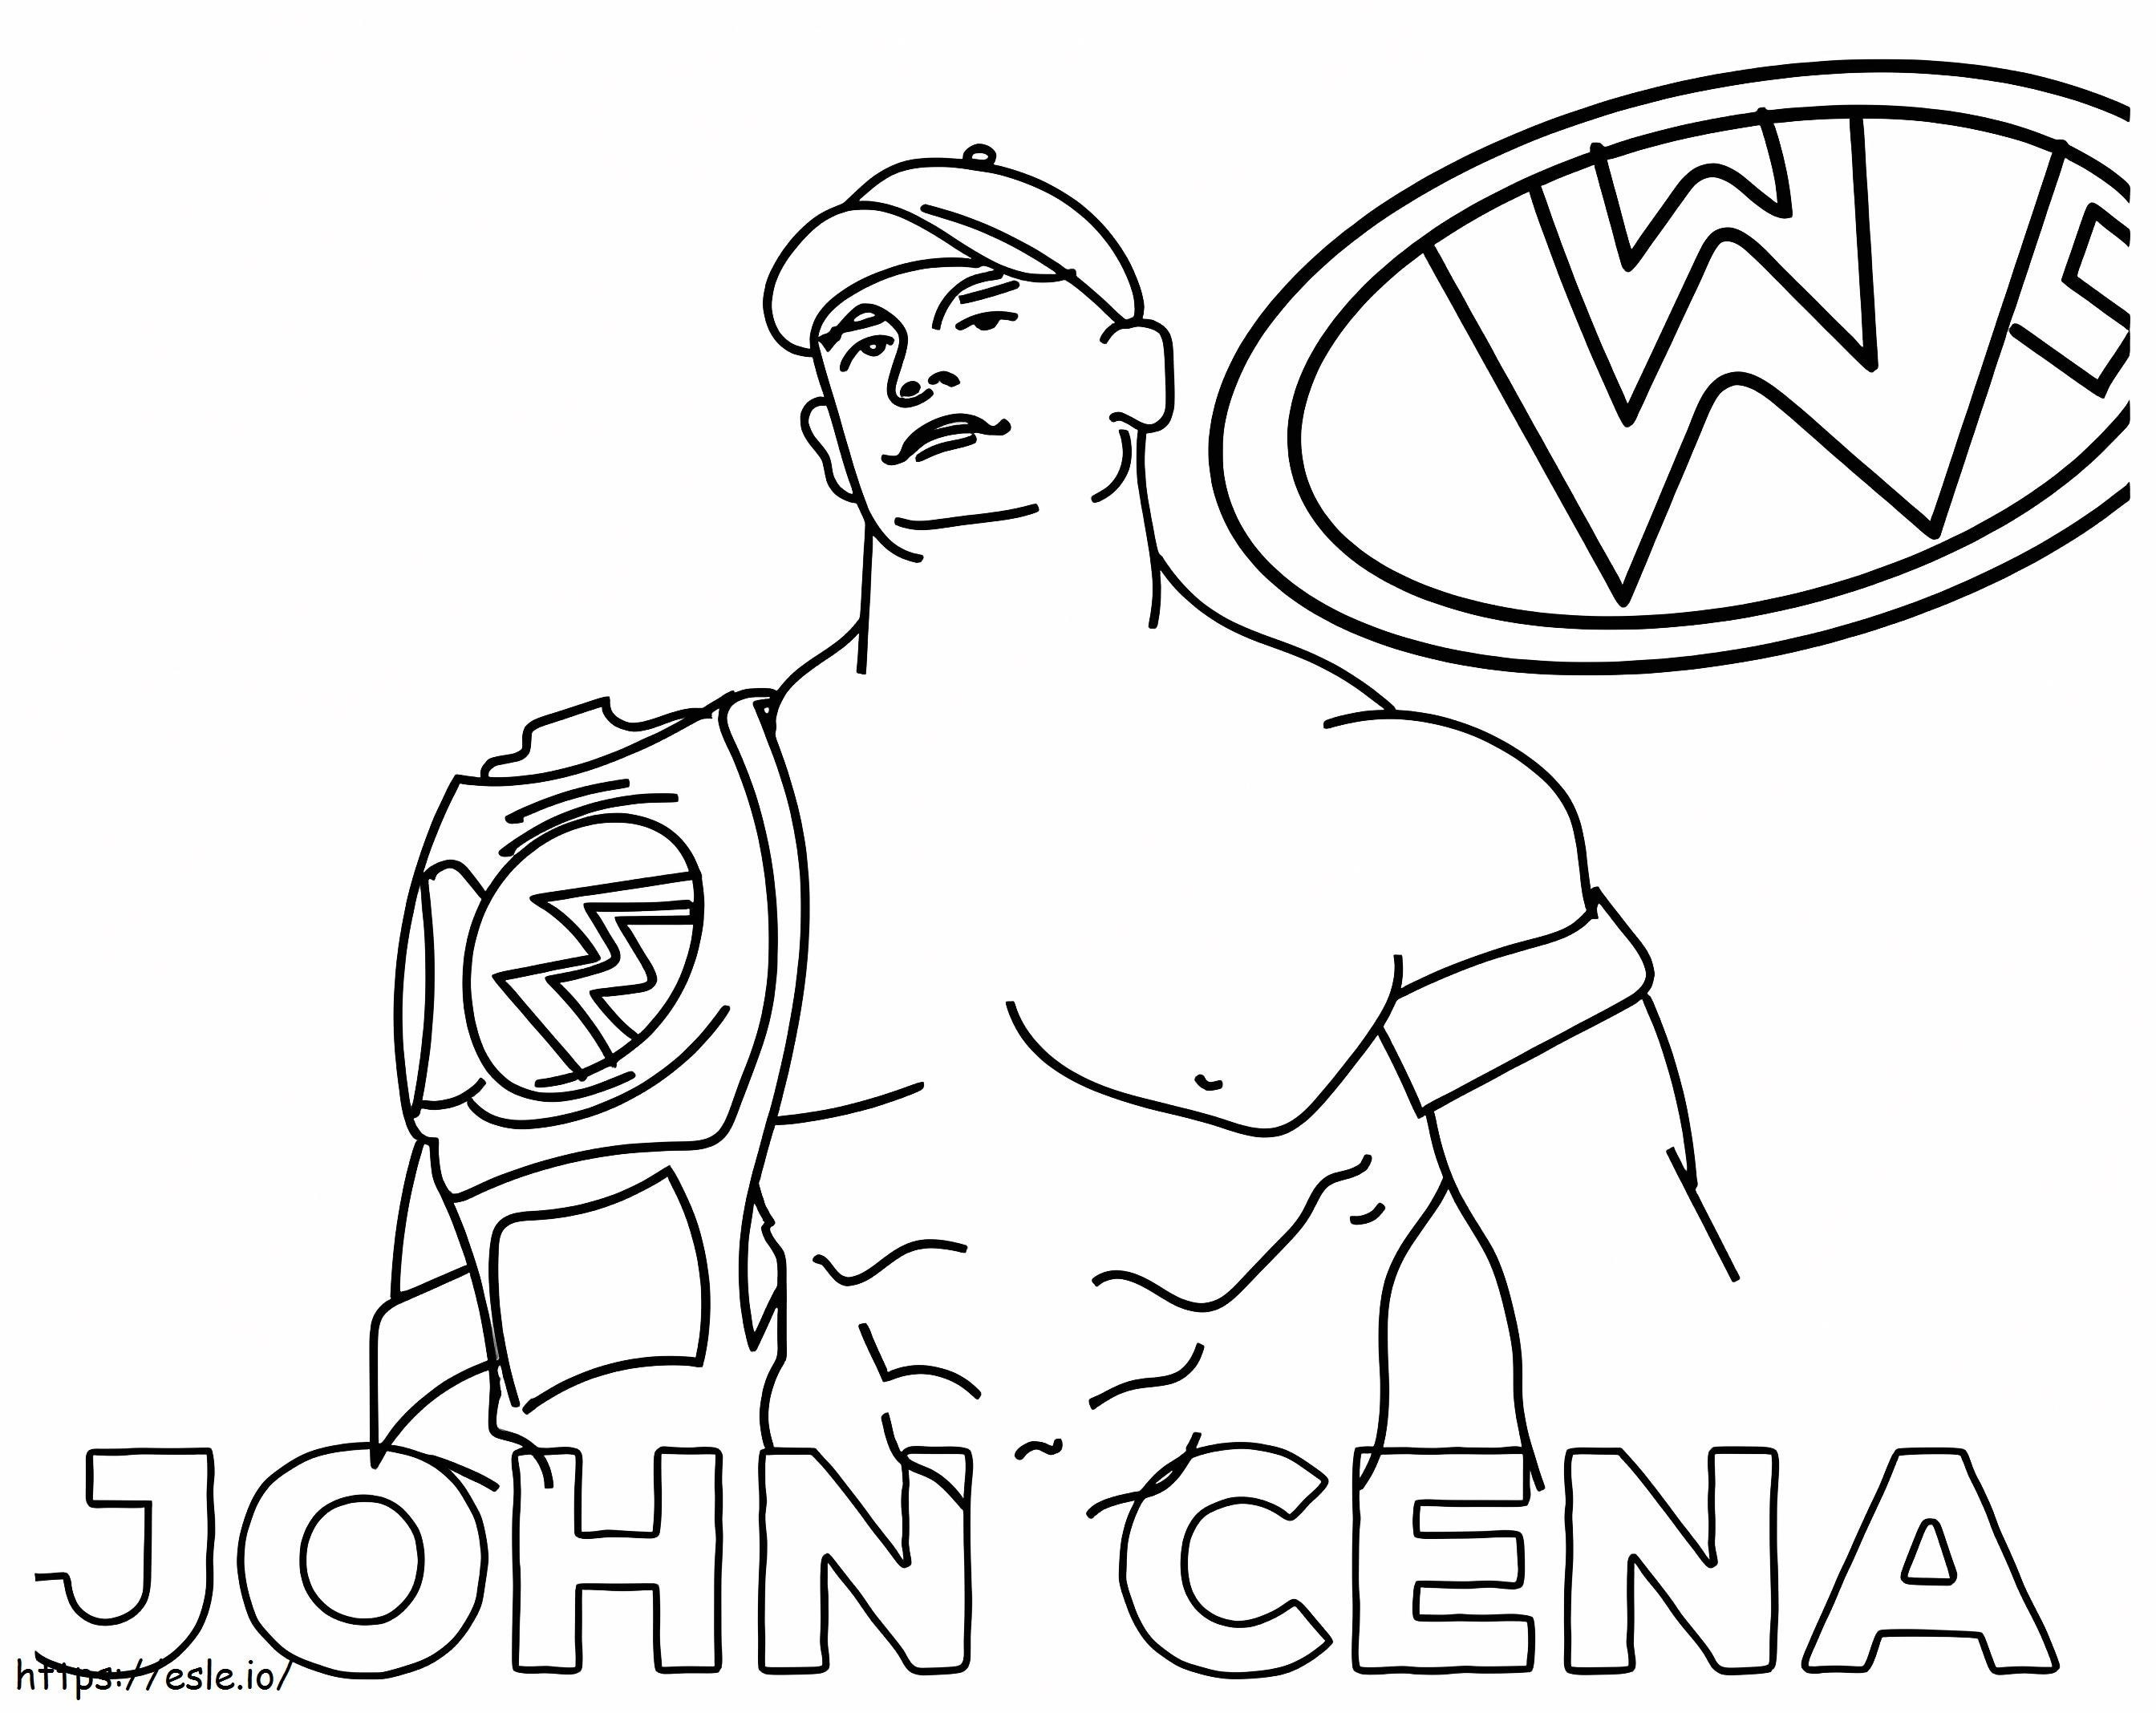 Printable John Cena coloring page